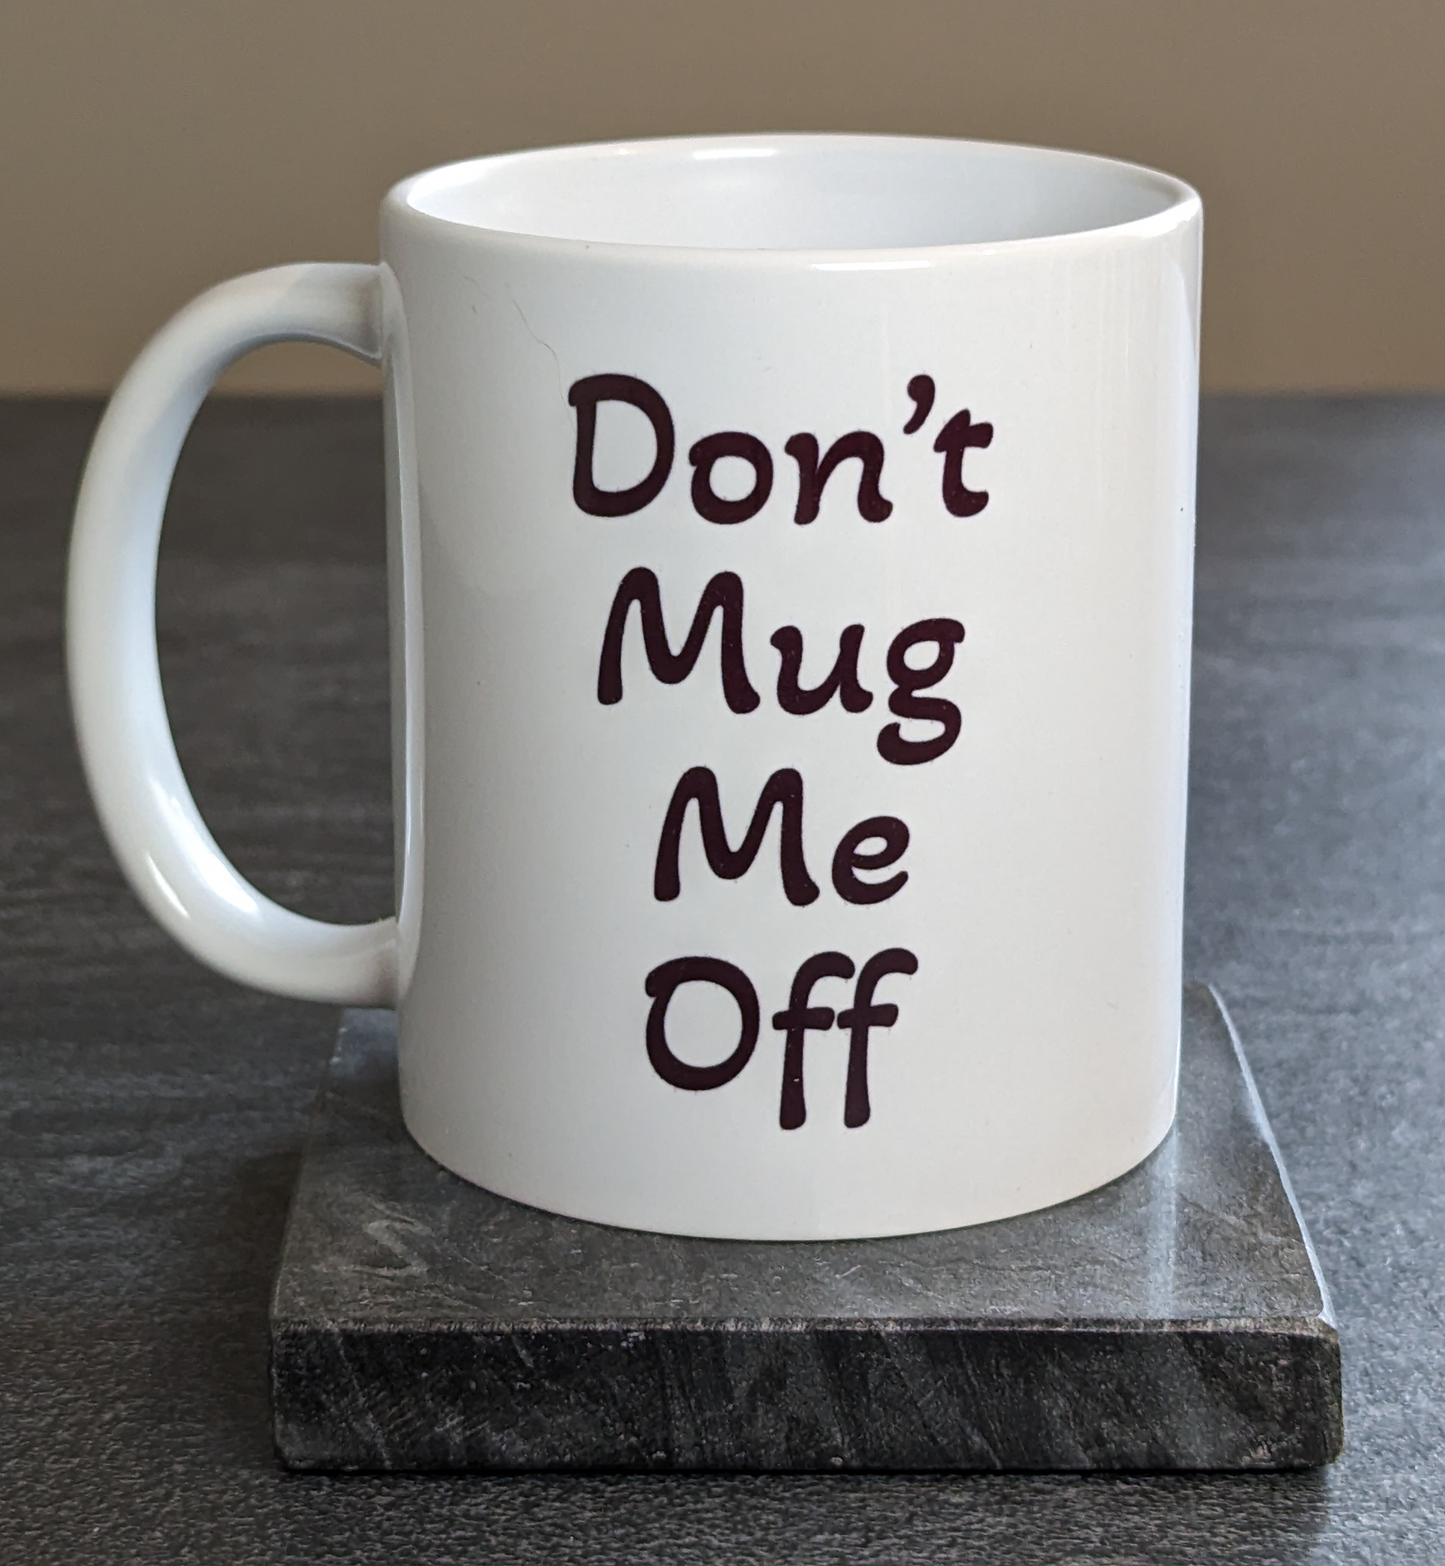 "Don't Mug Me Off"